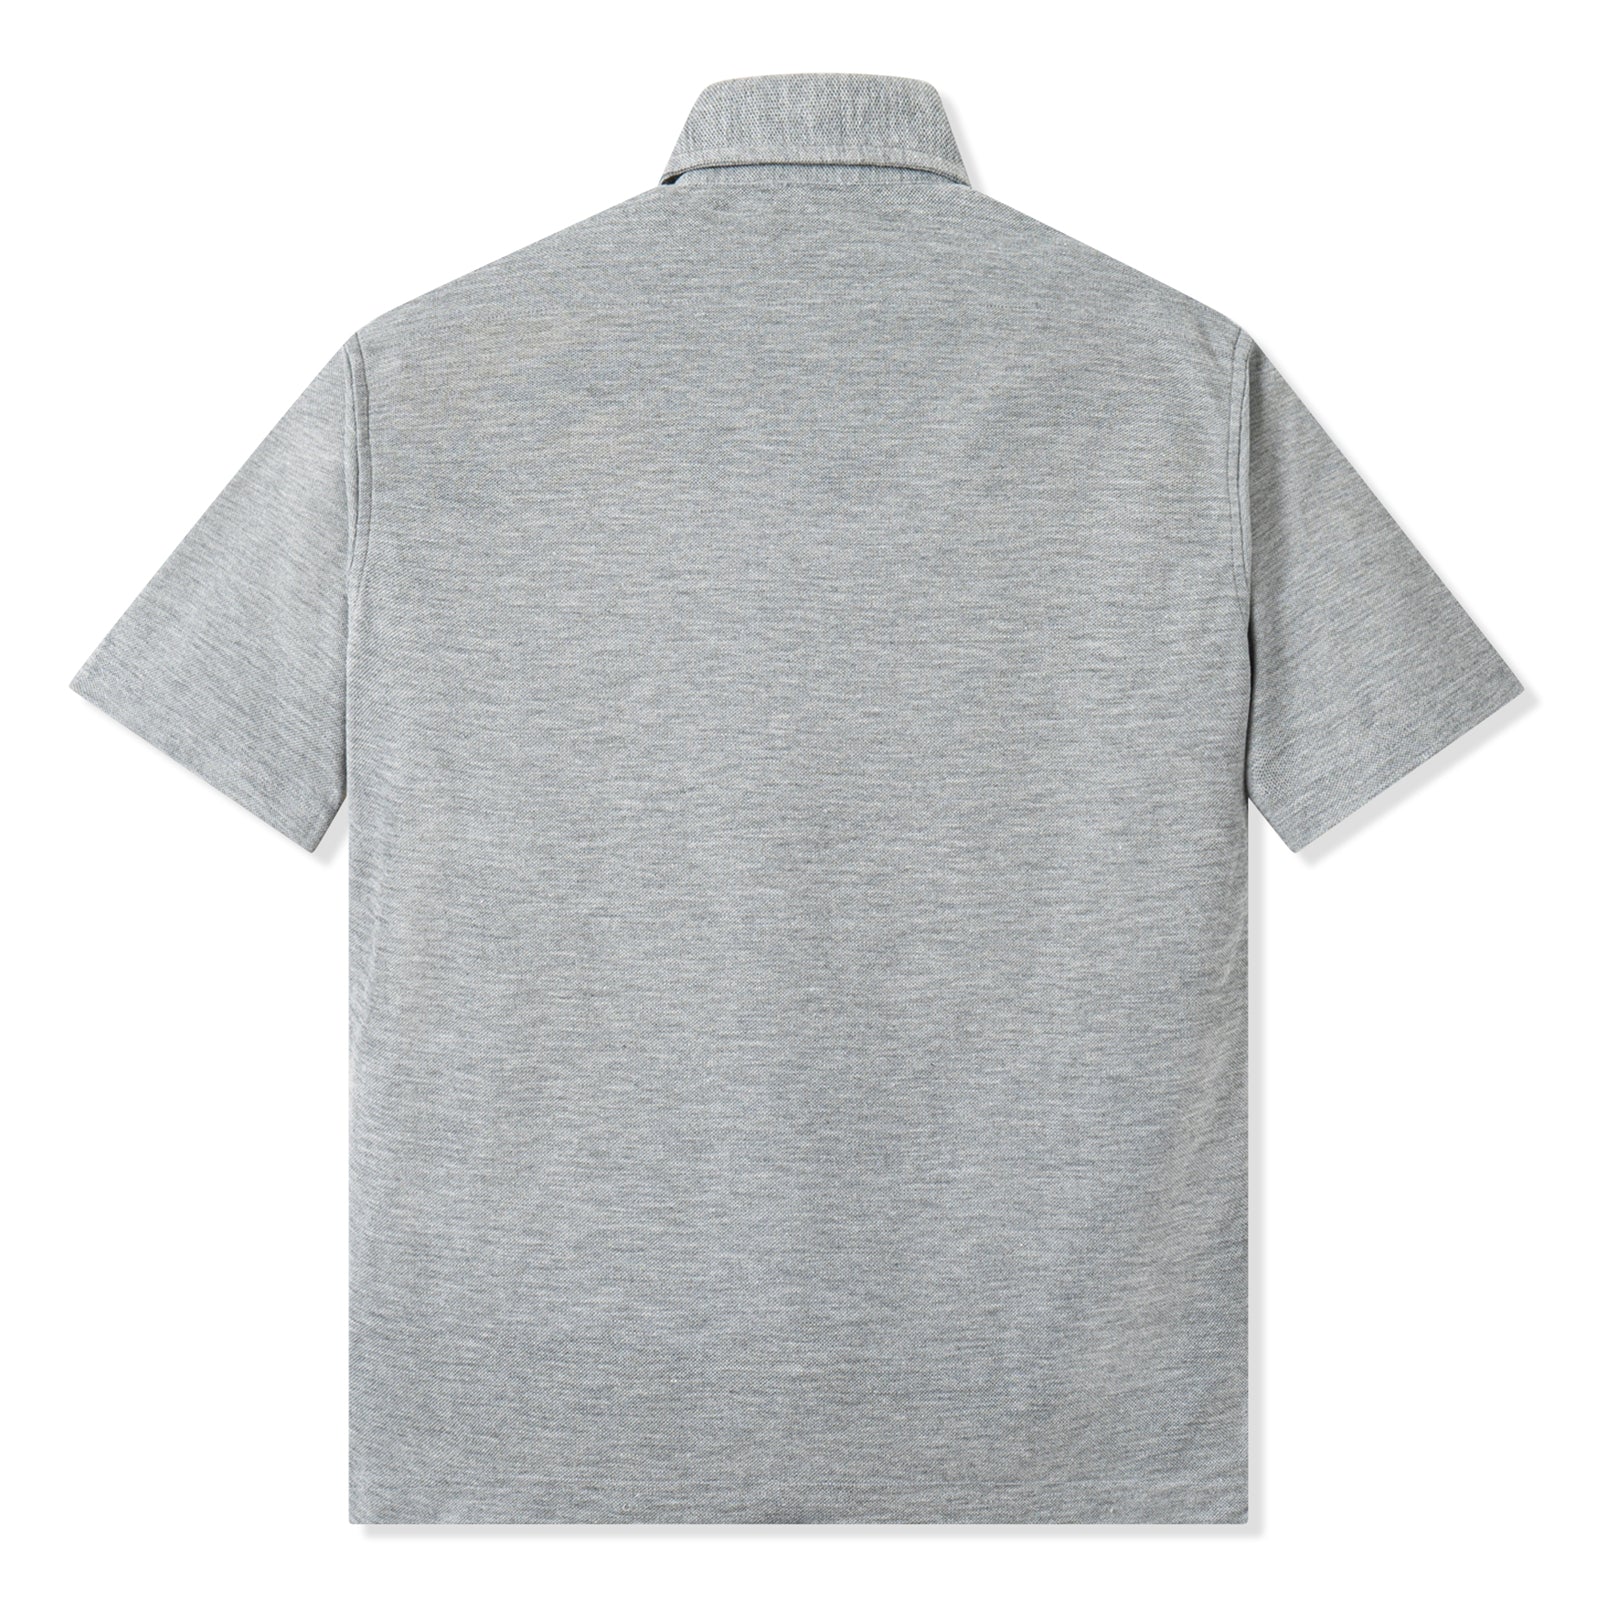 Parisian Polo Short Sleeve - Grey